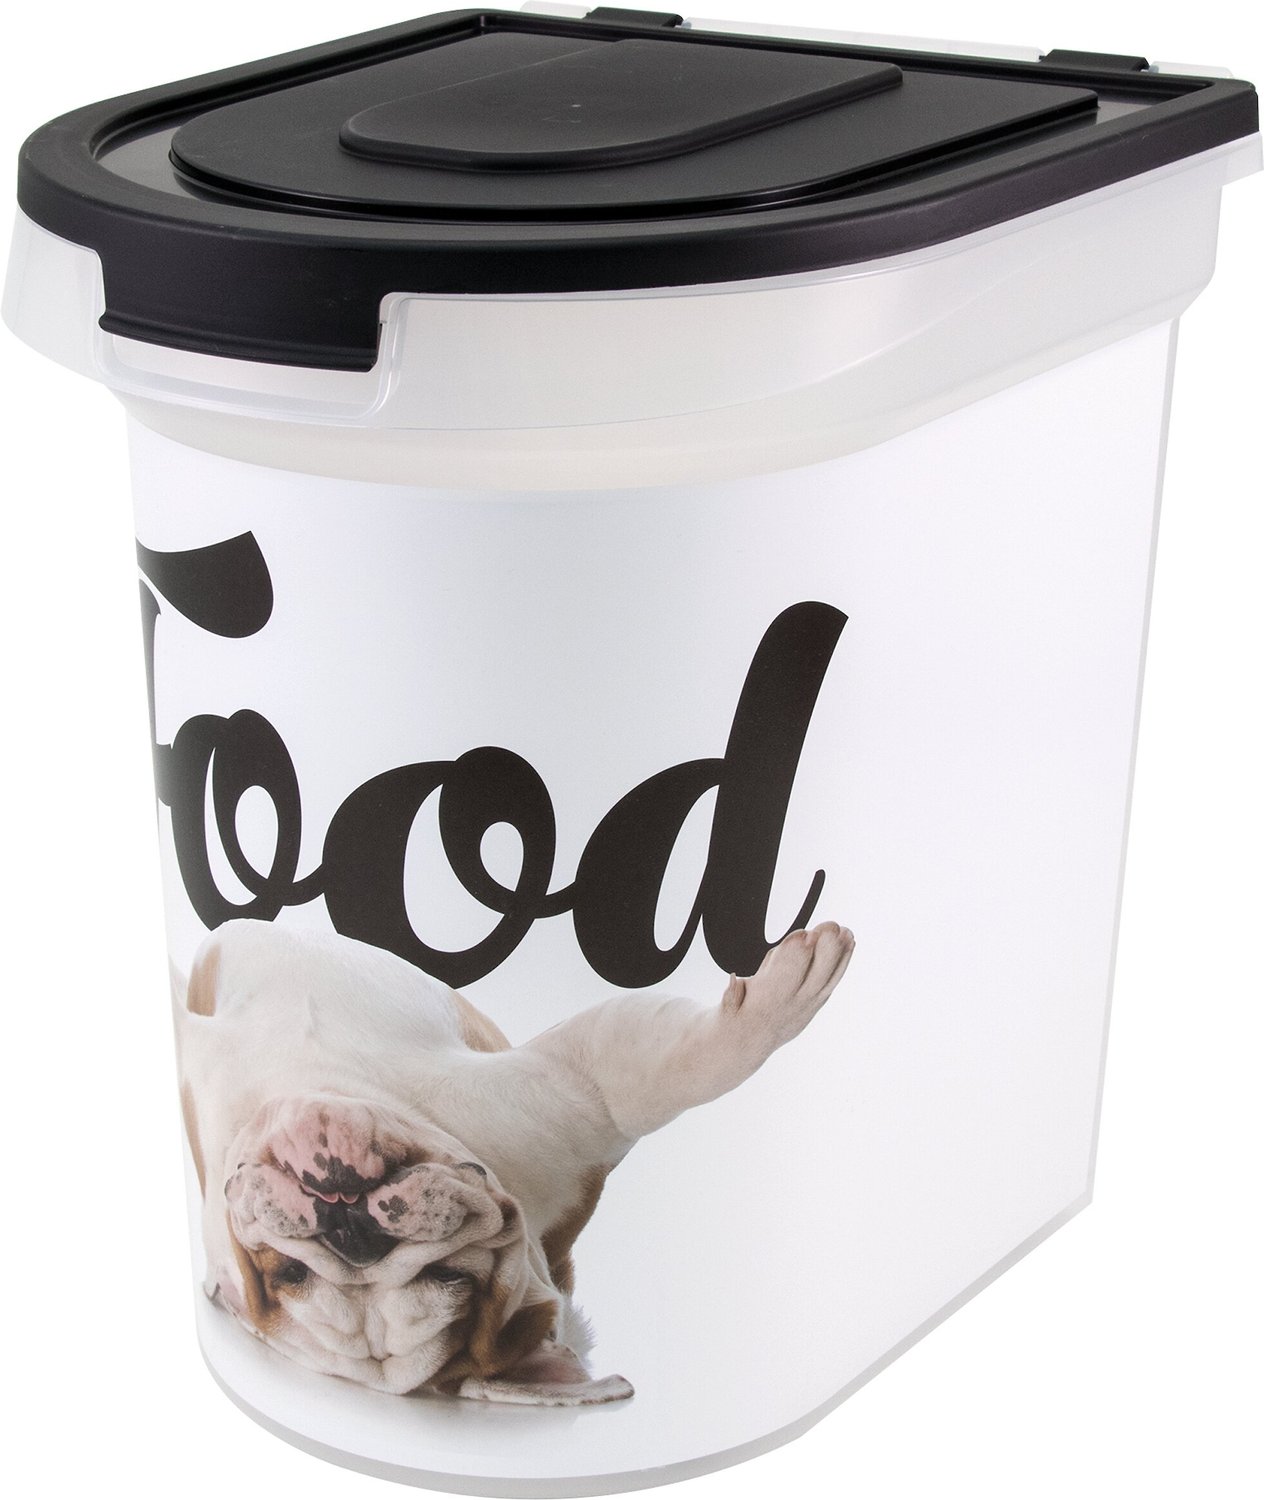 PAW PRINTS Bulldog Pet Food Storage Container, 26lb